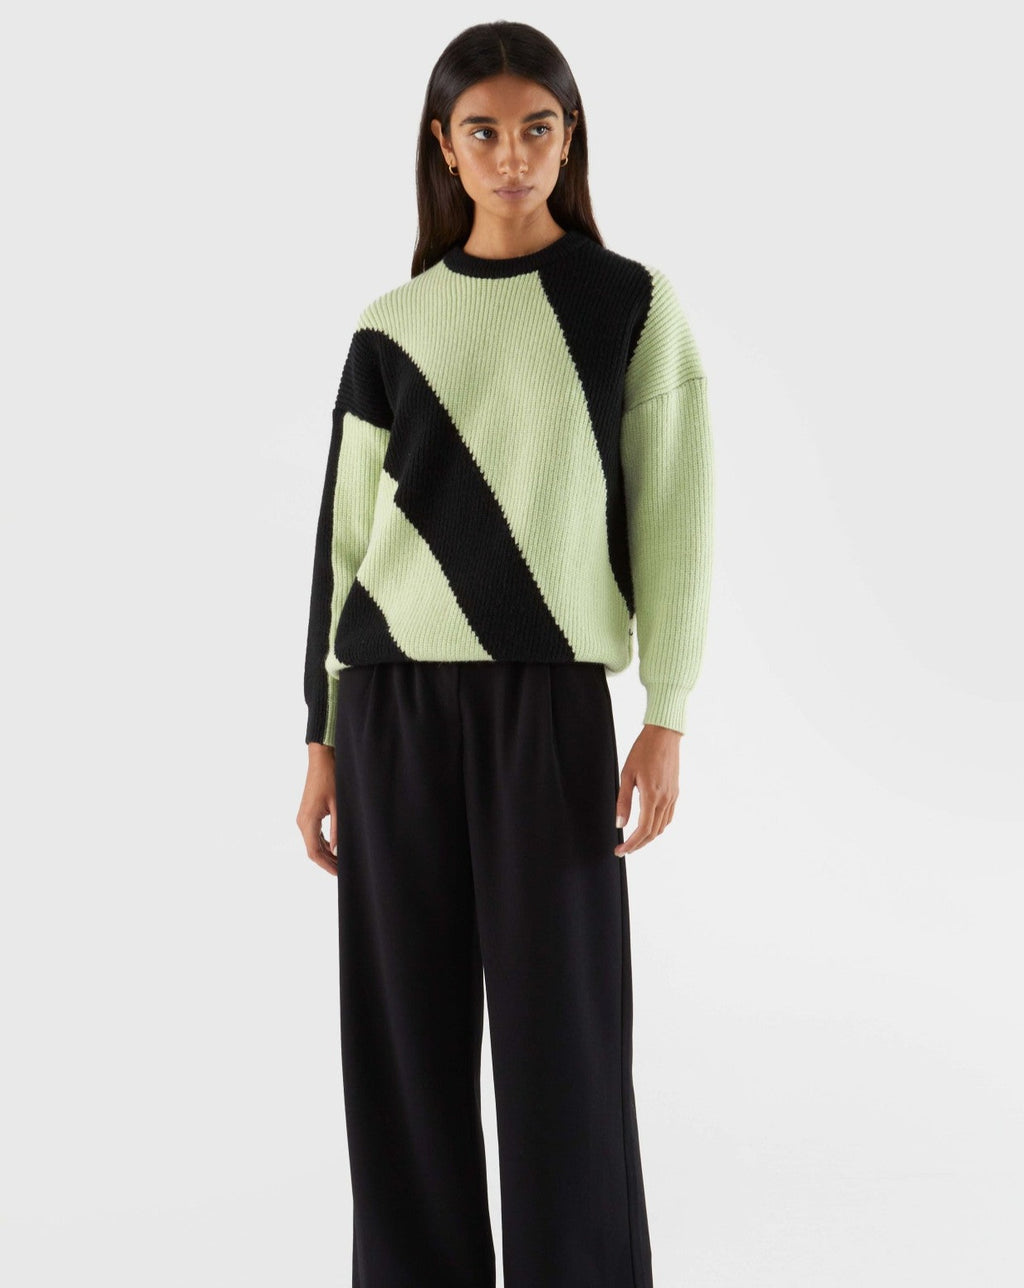 Compania - Green and Black Stripe Knit